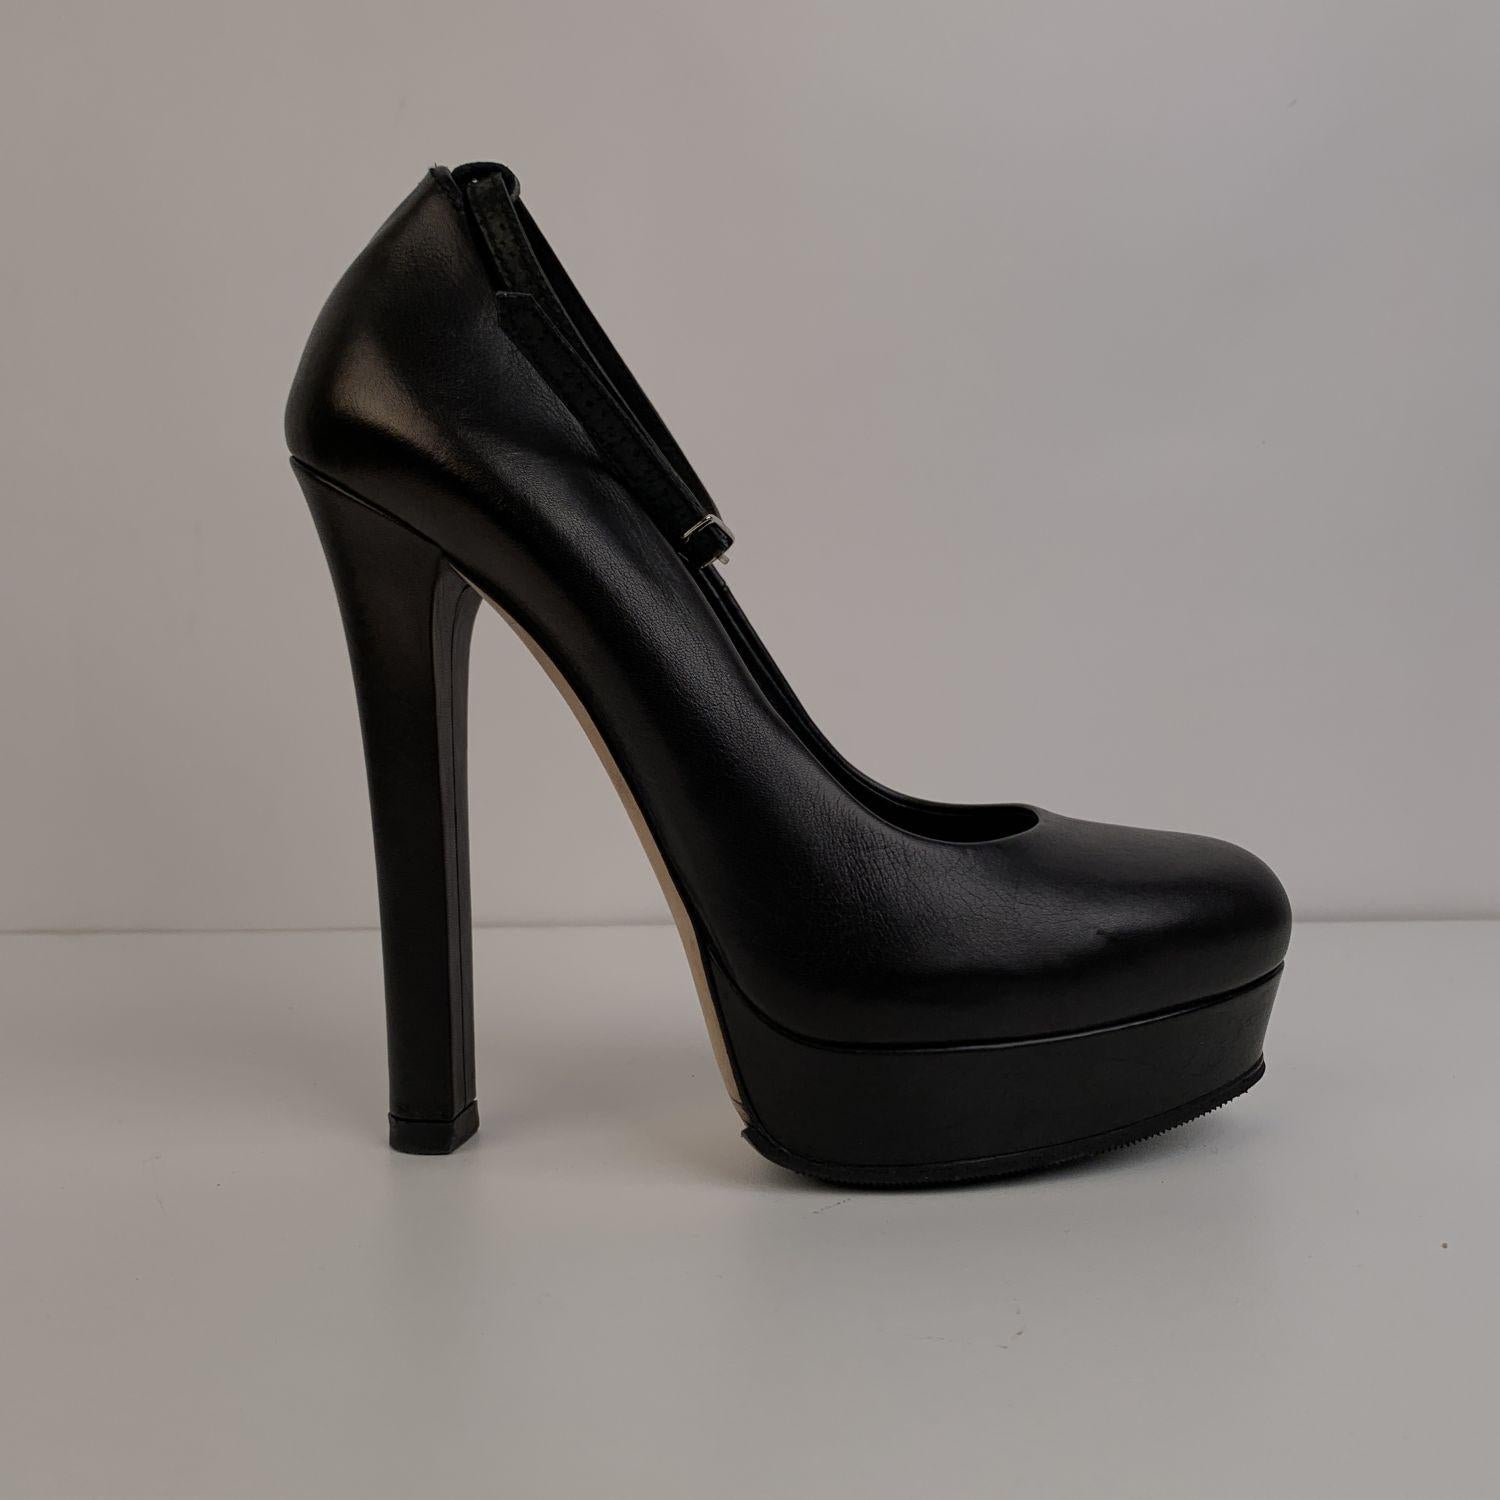 Gucci Black Leather Platform Pumps Heels with Ankle Strap Size 38.5 2